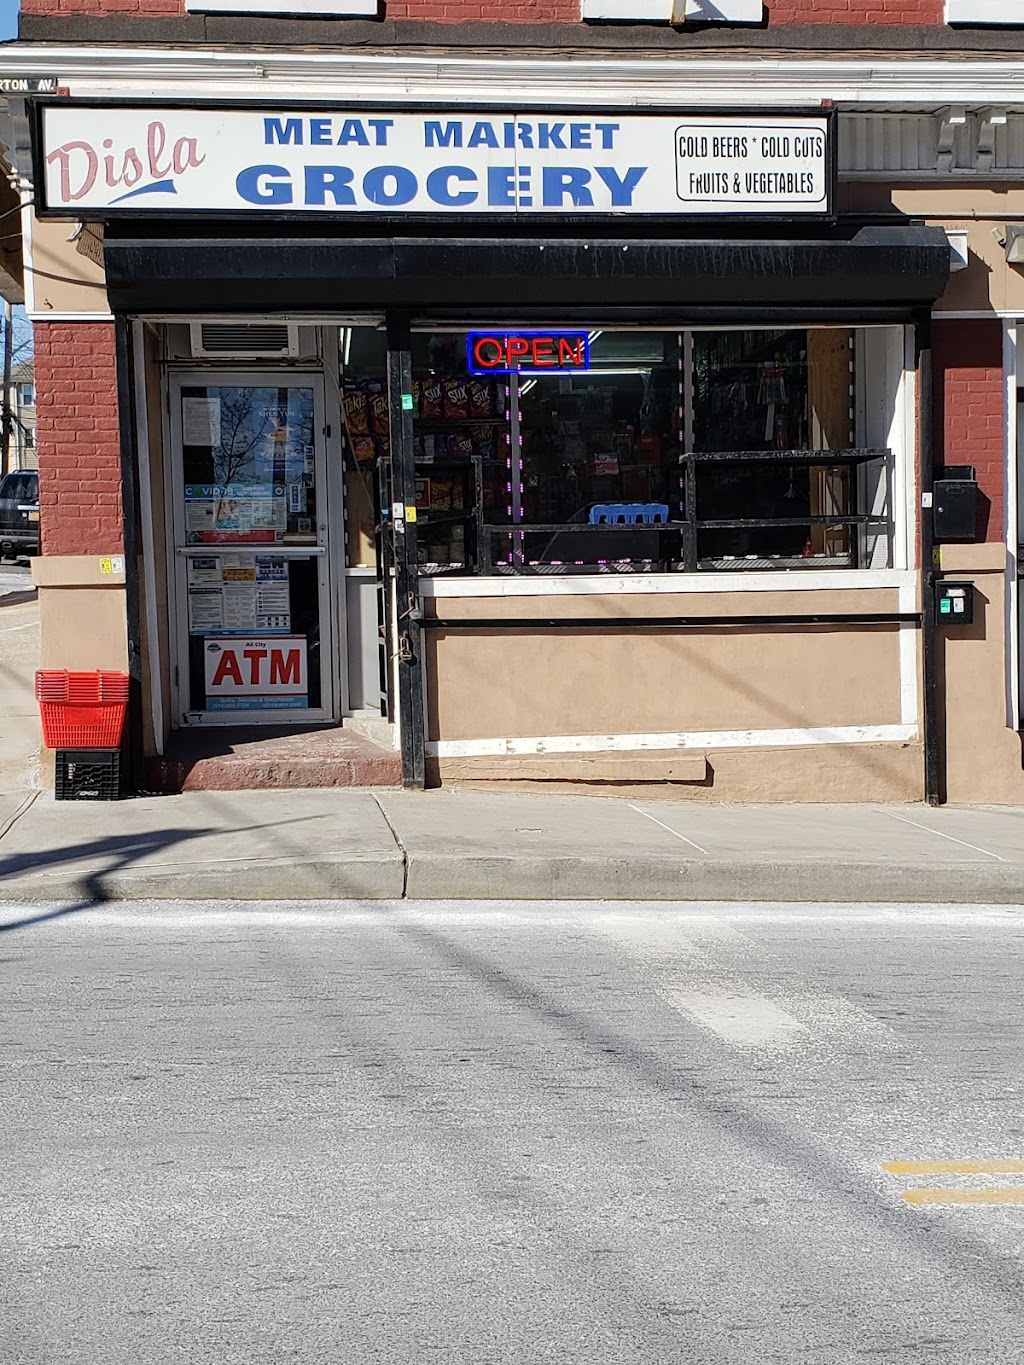 Disla Grocery & Meat Market | 159 Ashburton Ave, Yonkers, NY 10701 | Phone: (914) 423-6528